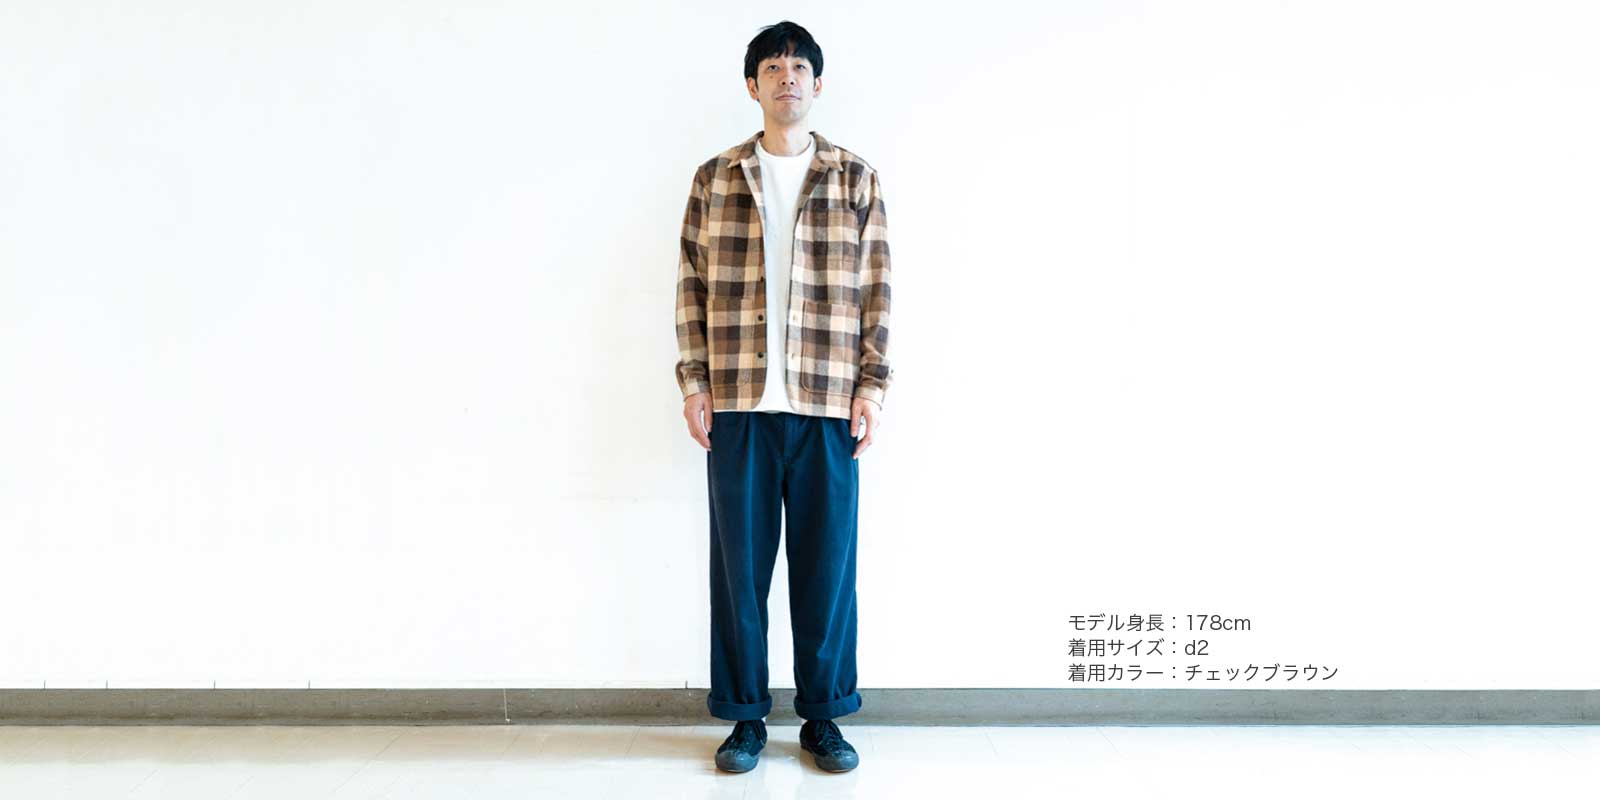 【sold out】d WEAR バックポケットシャツ・チェックブラウン・L